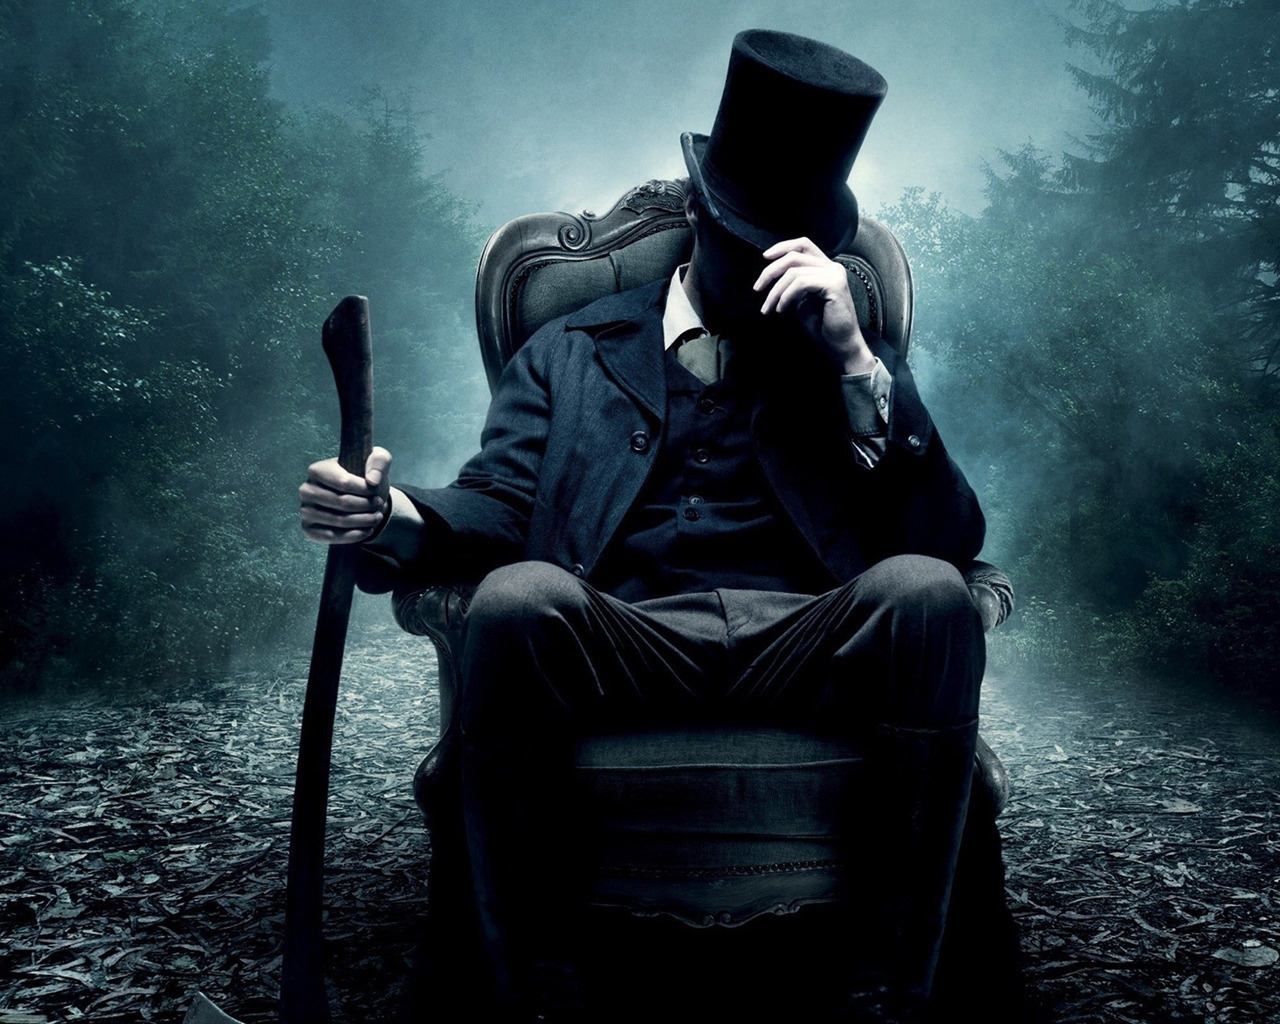 Abraham Lincoln Vampire Hunter for 1280 x 1024 resolution